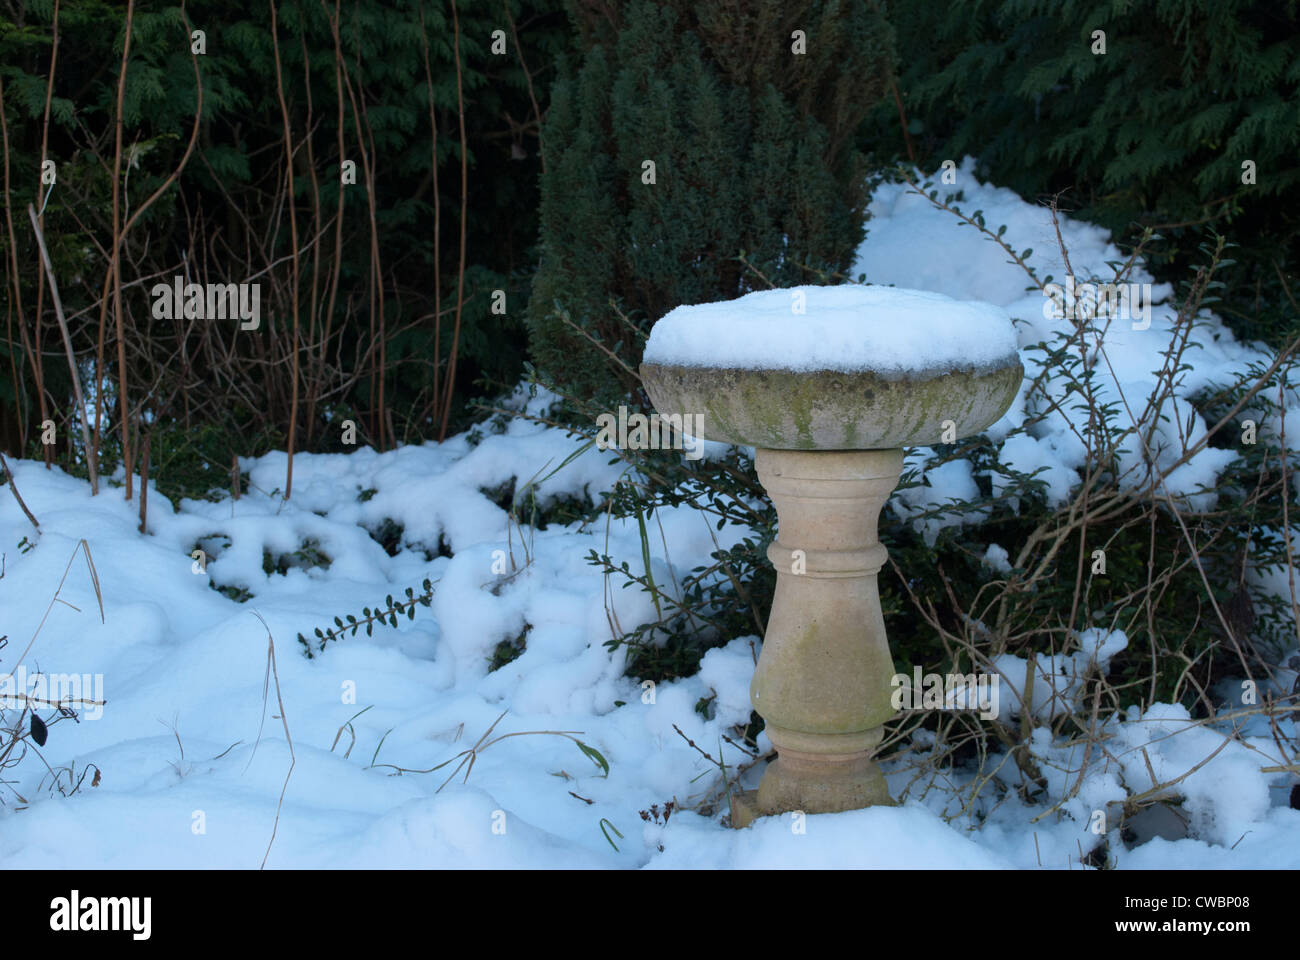 Snow covered stone bird bath in garden Stock Photo